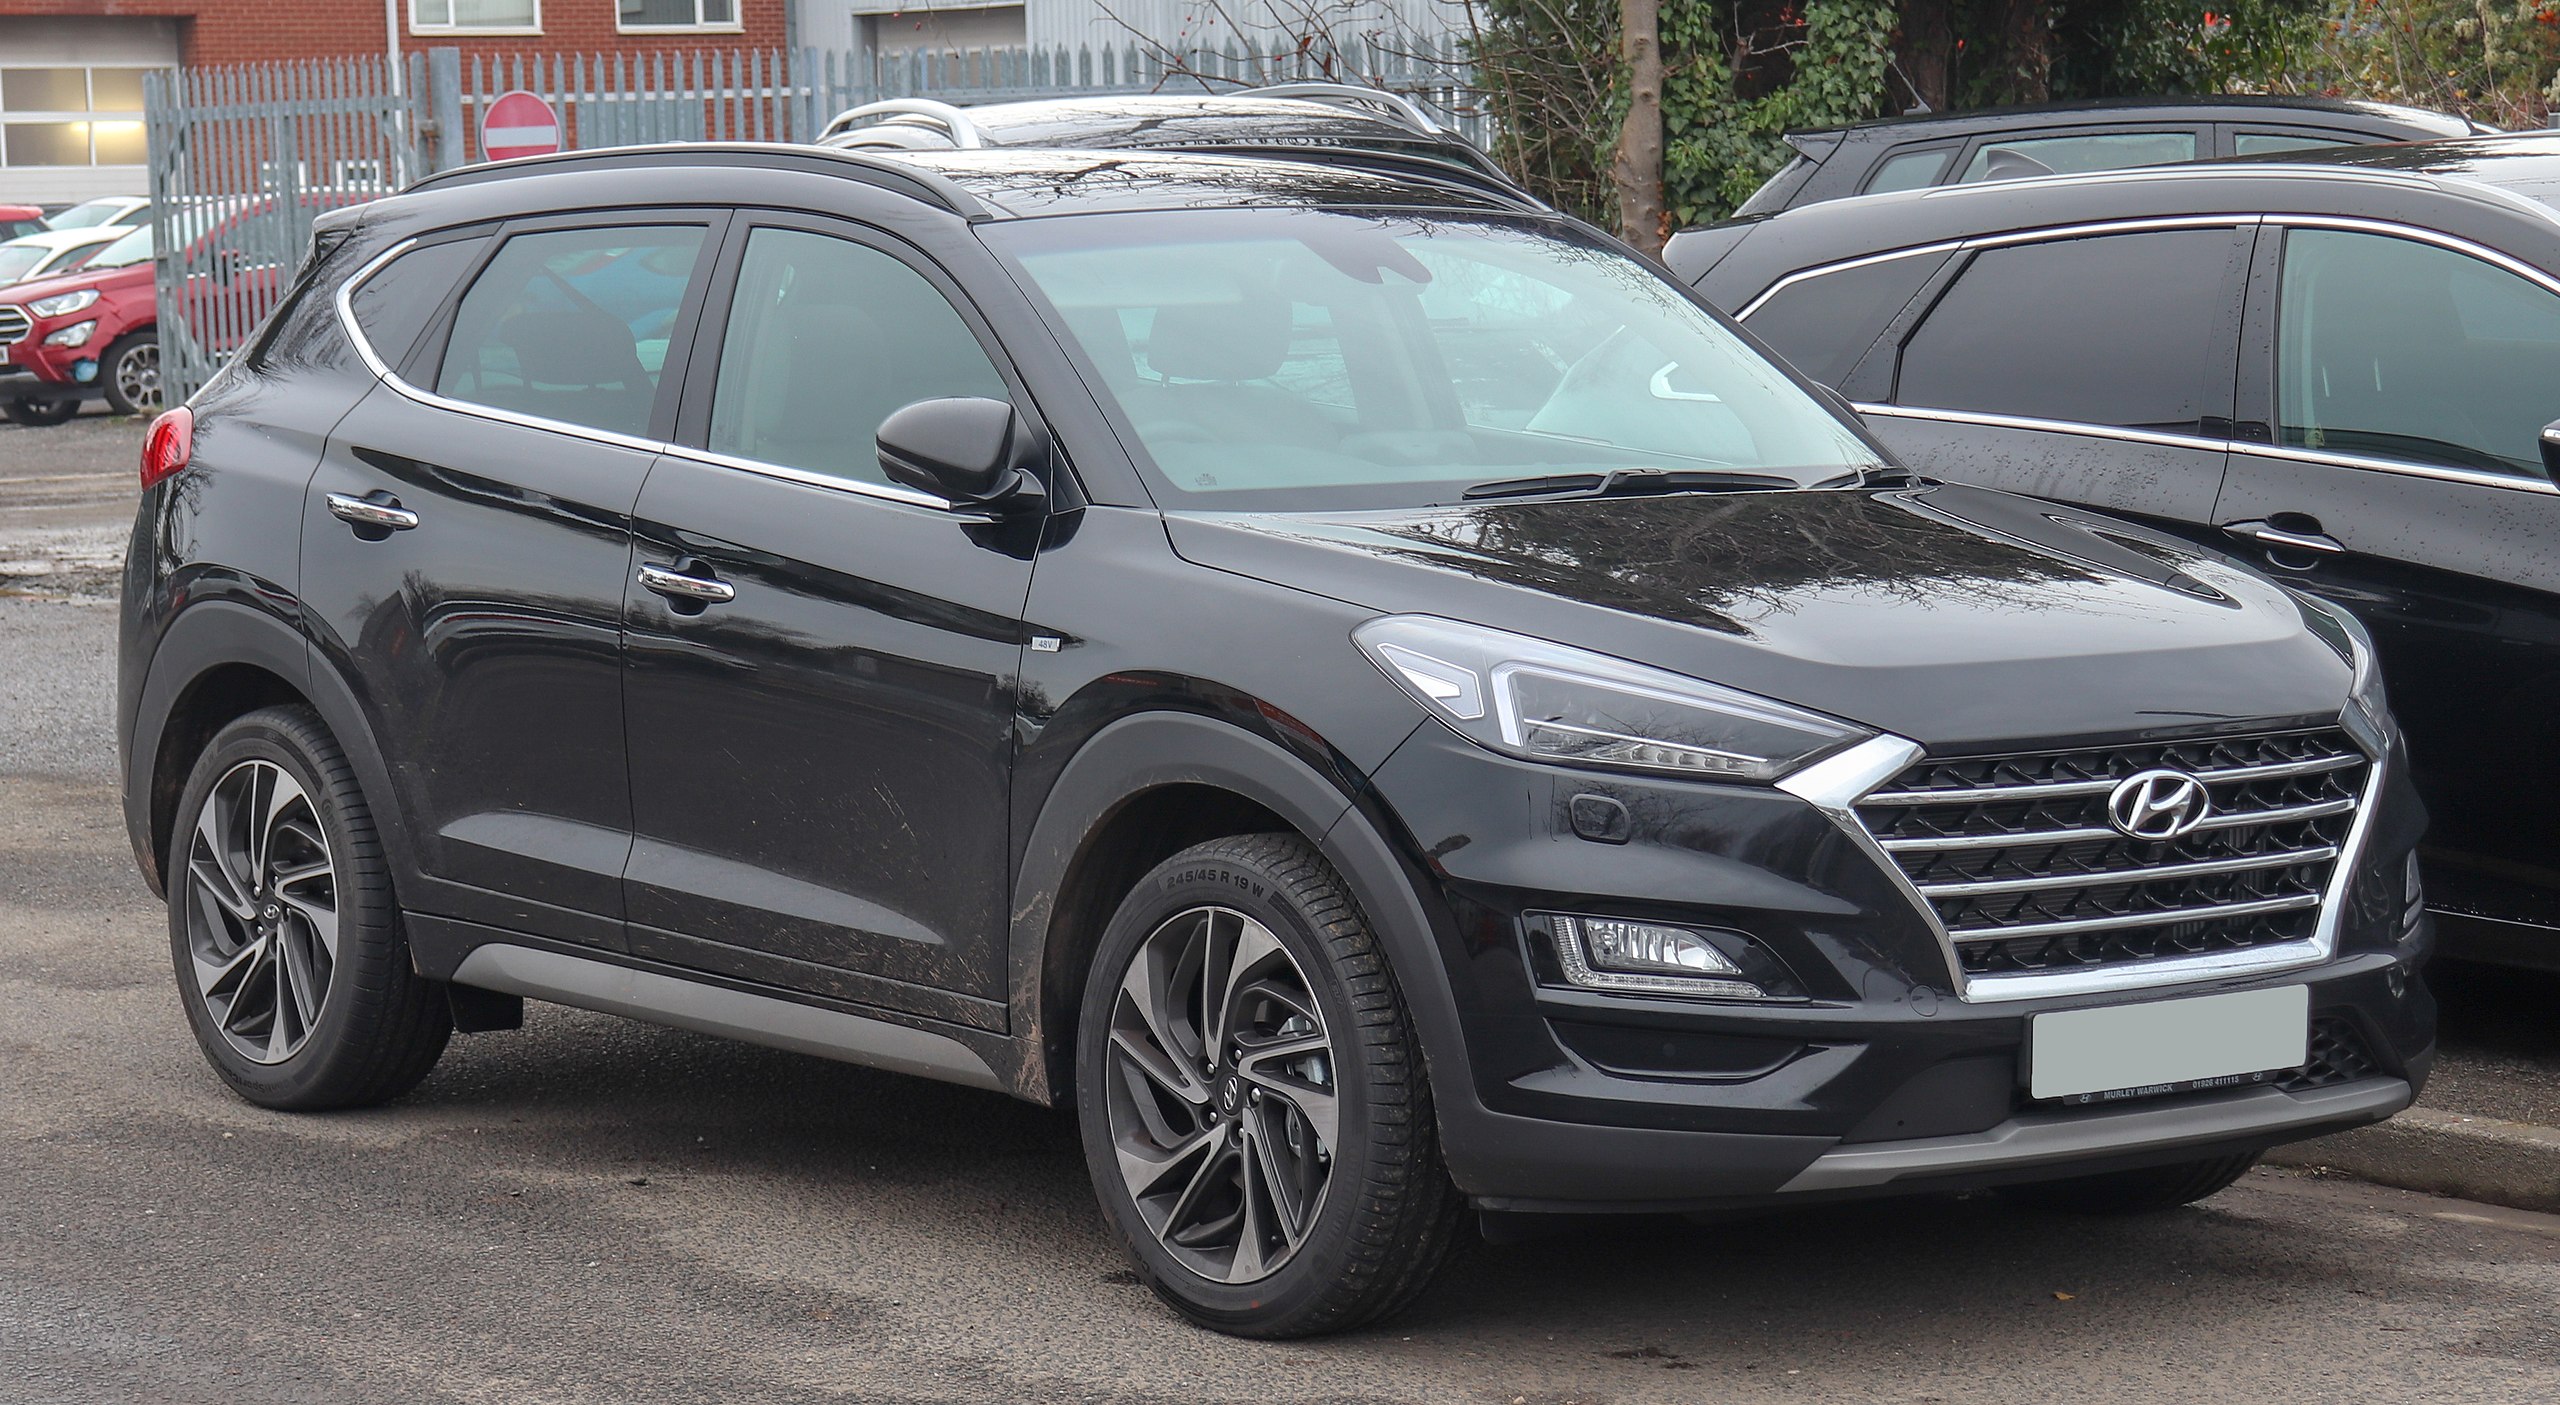 File:2018 Hyundai Tucson Premium SE CRDi 2WD facelift 2.0 Front.jpg -  Wikimedia Commons